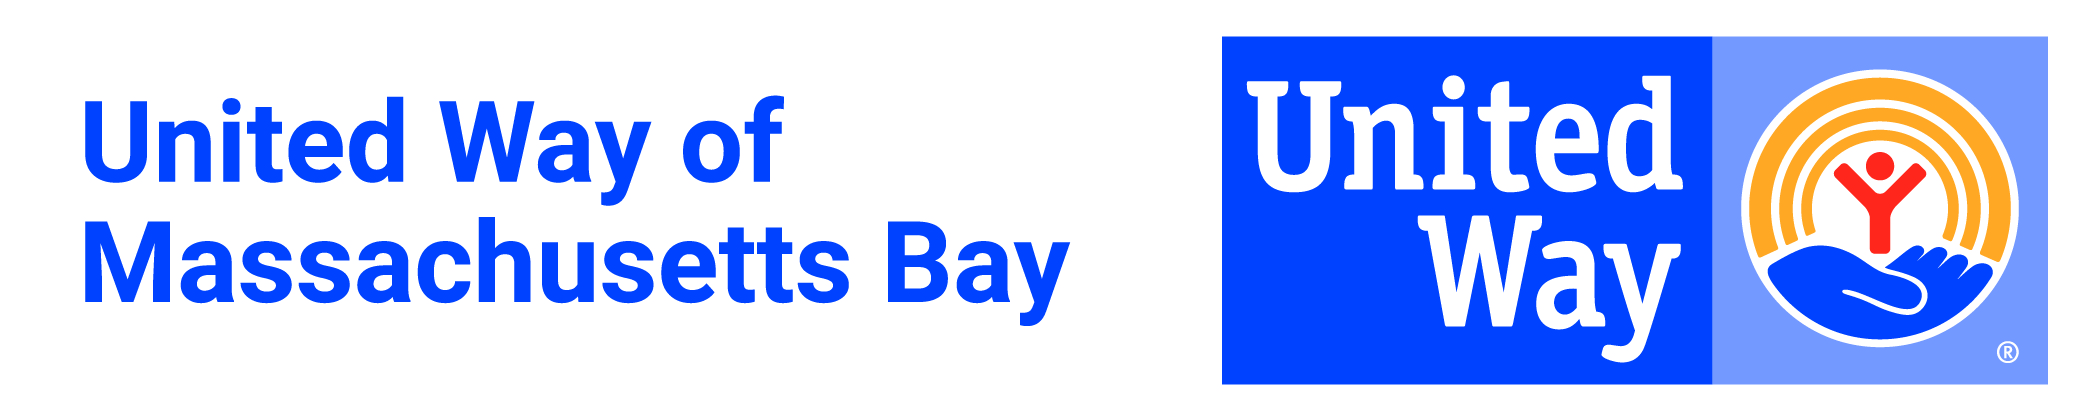 United Way Mass Bay logo